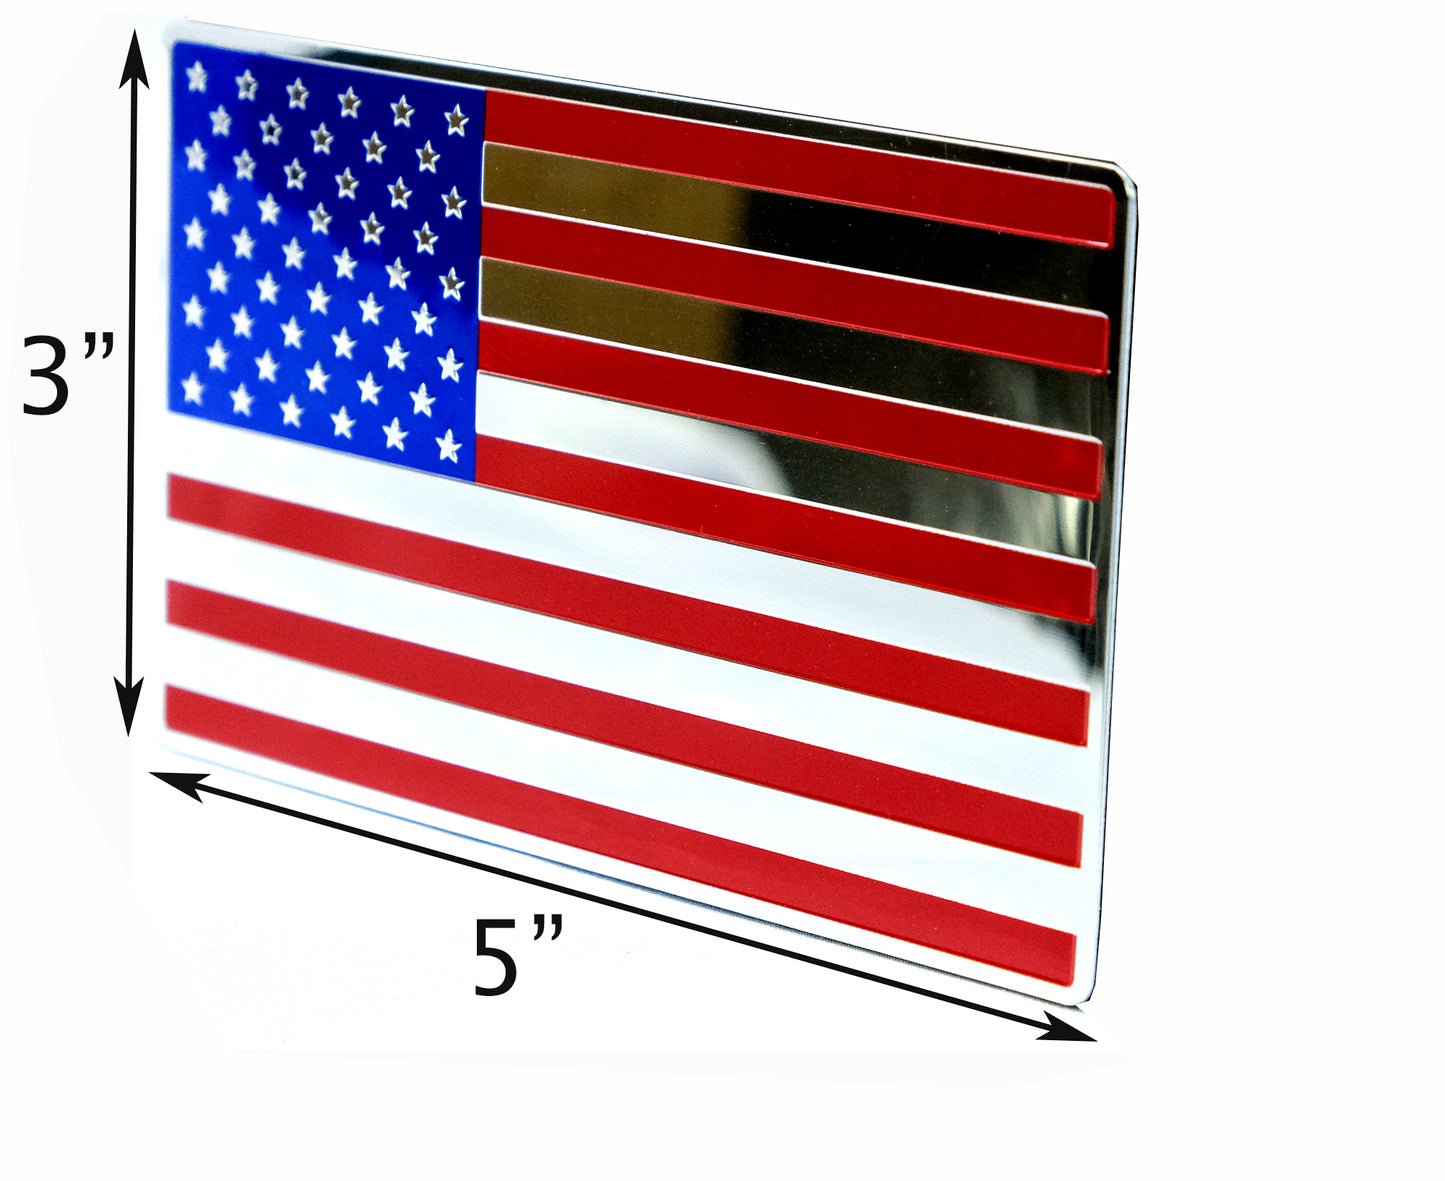 USA Metal Flag Emblem for Cars, Trucks (Color Flag, 5"x 3") 1pcs